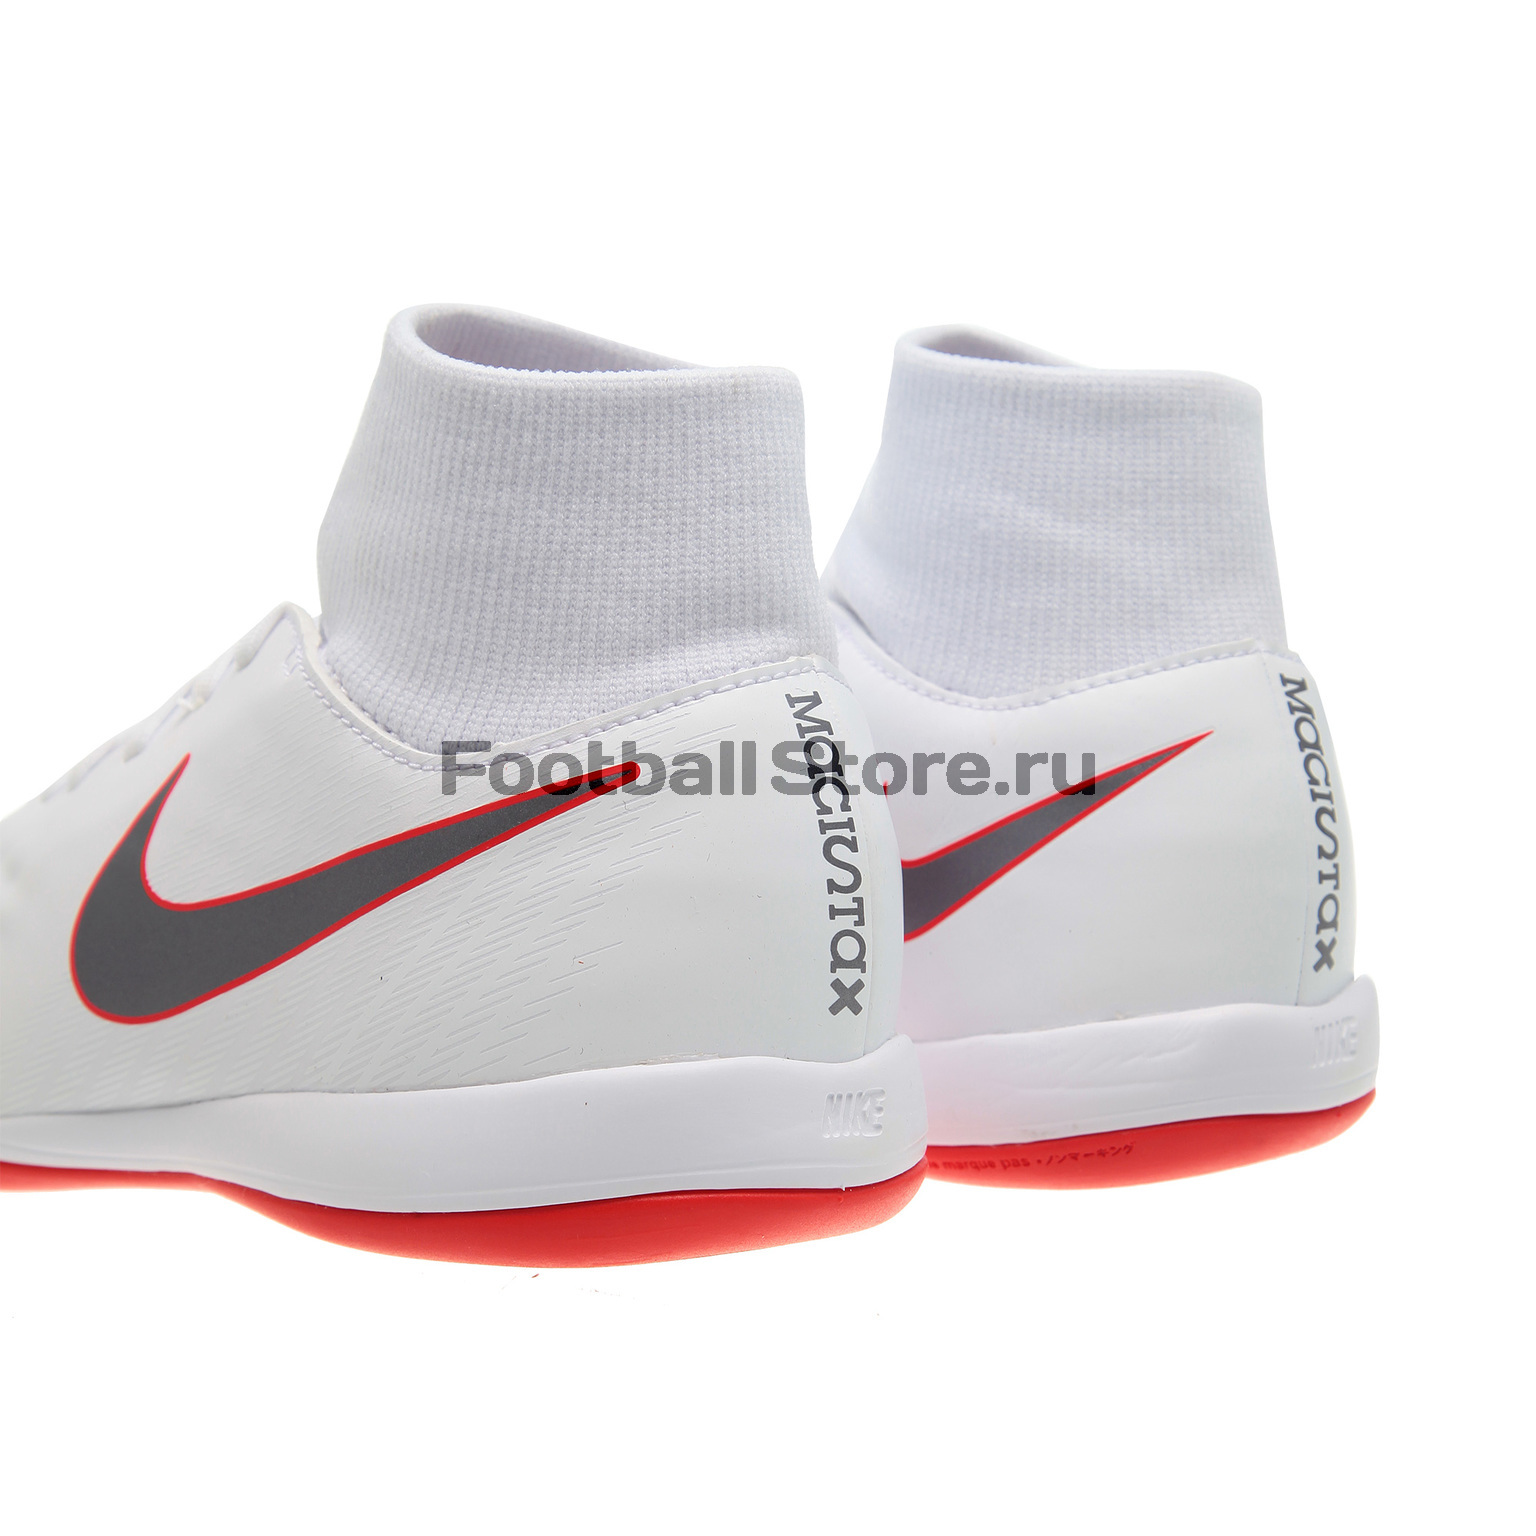 Футзалки детские Nike ObraX 2 Academy DF IC AH7315-107